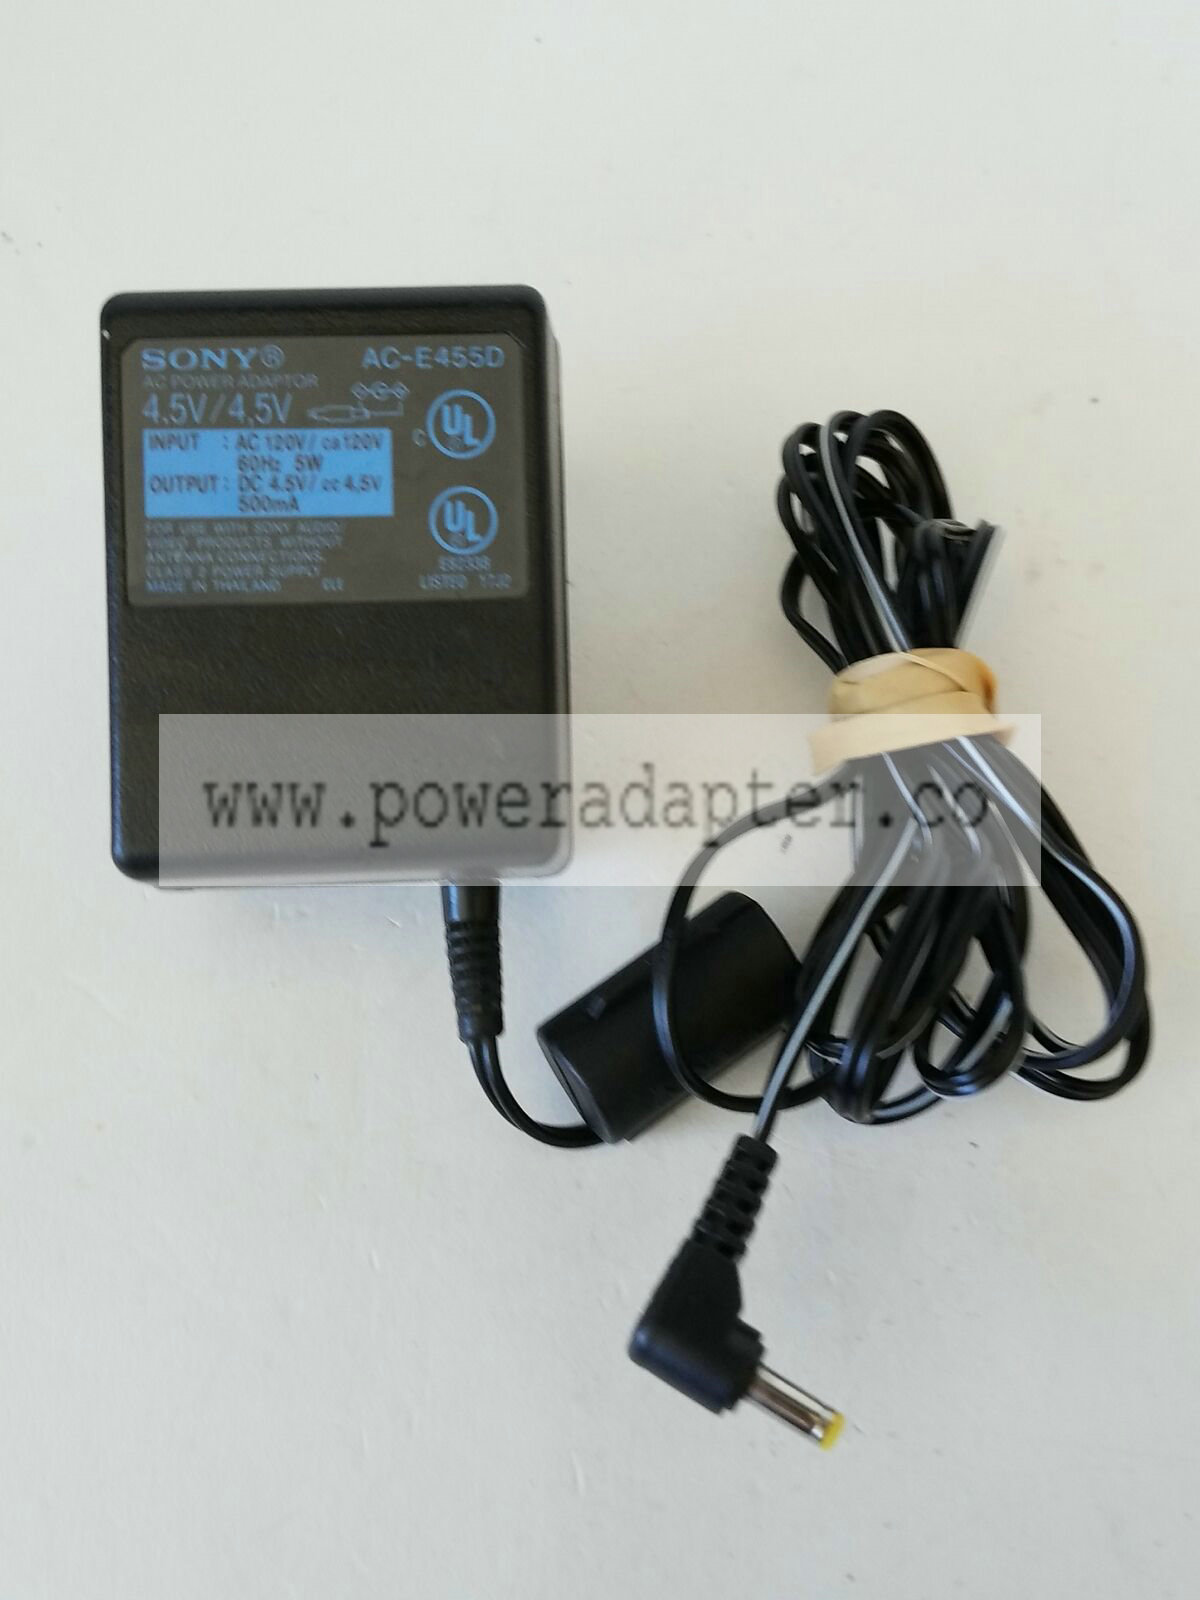 Sony AC-E455D Power Supply AC Adapter 4.5VDC 500mA Brand: Sony MPN: AC-E455D Model: AC-E455D Output Voltage: 4.5V